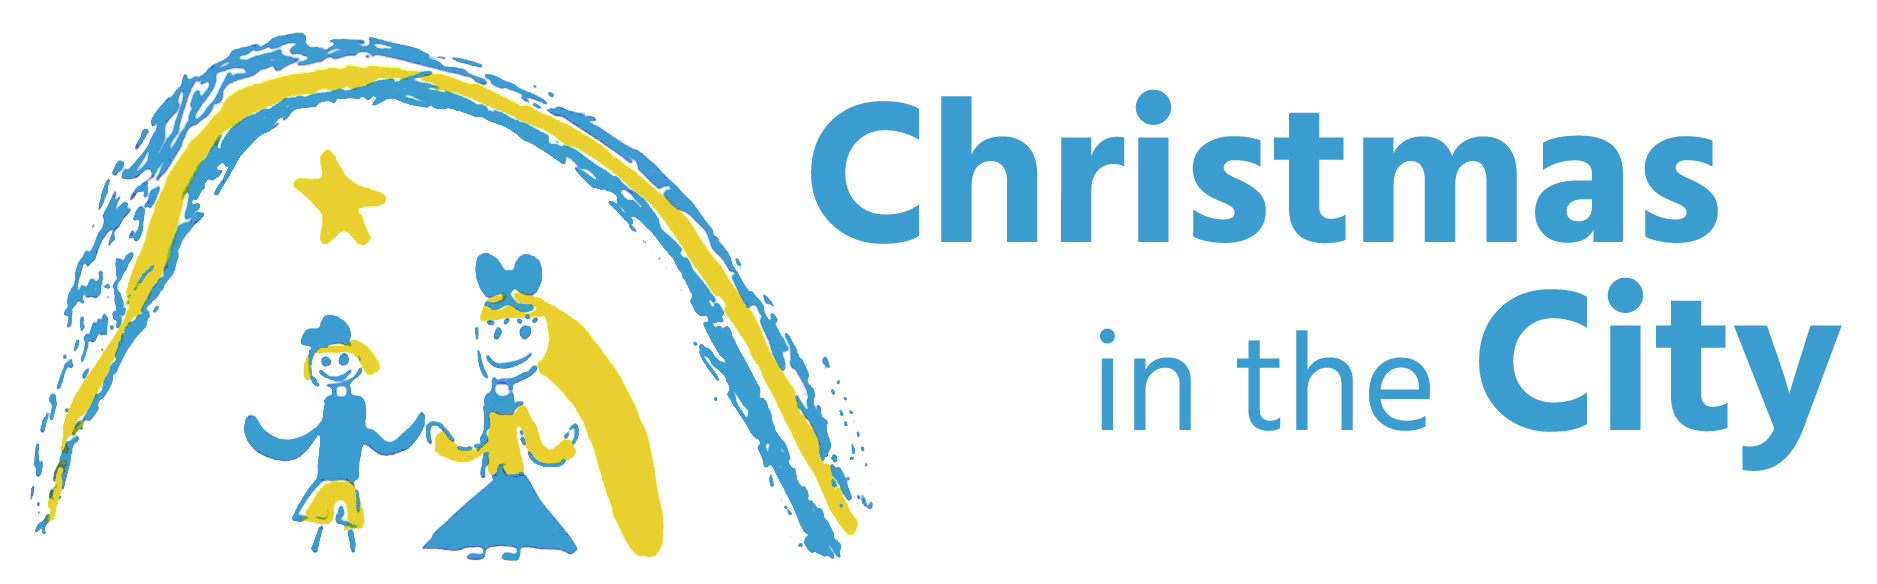 Christmas List Logo - Christmas in the City